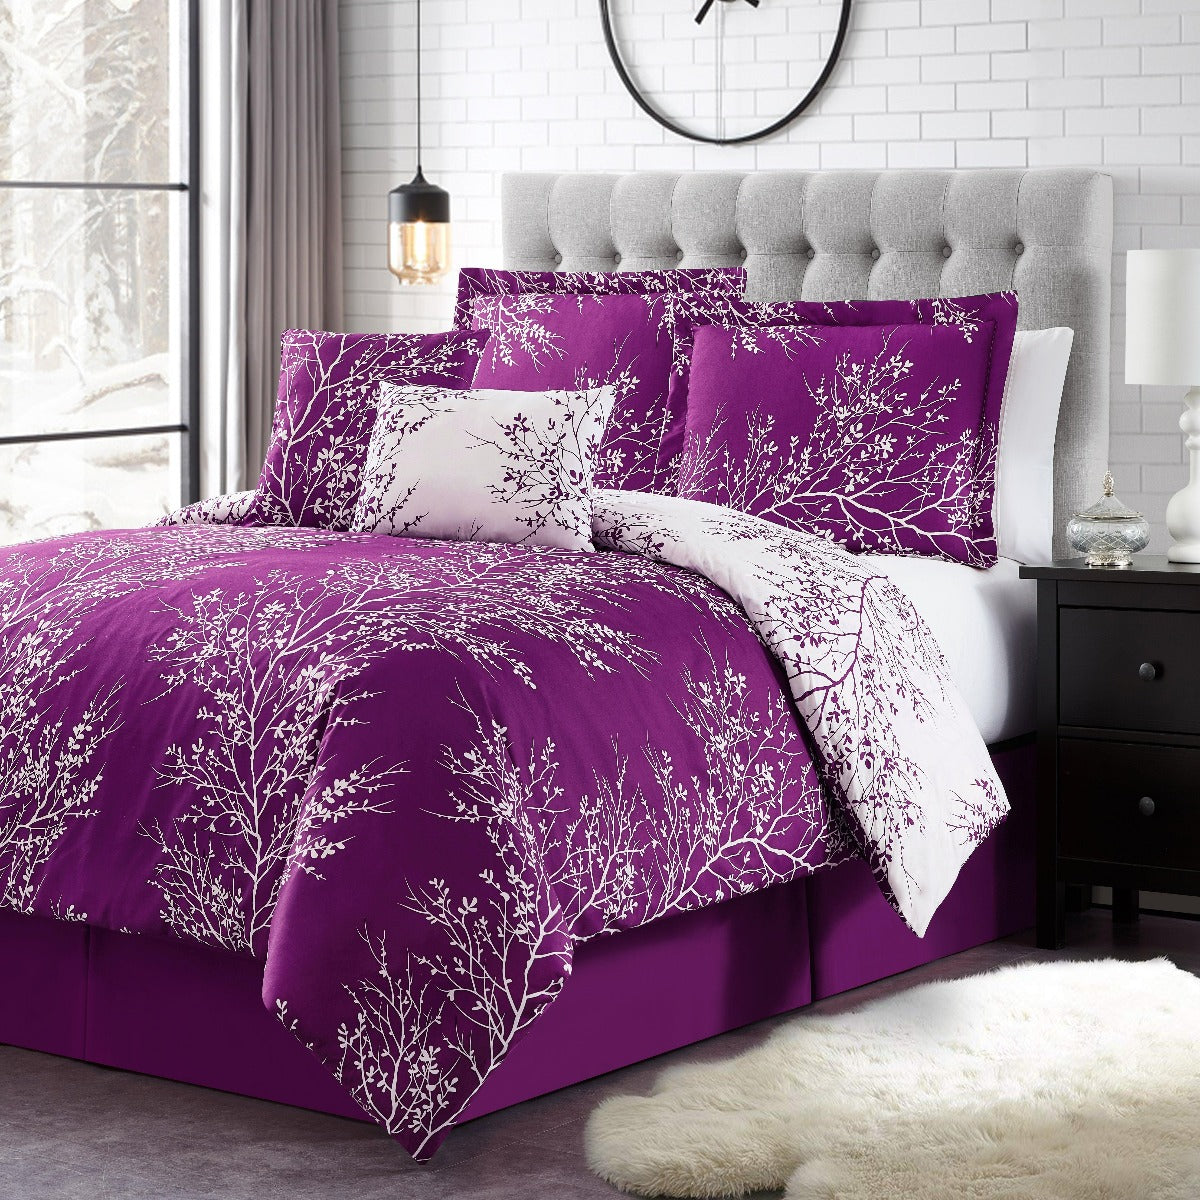 Foliage Reversible Comforter Set + Two Free Sham Pillows - Spirit Linen - Purple